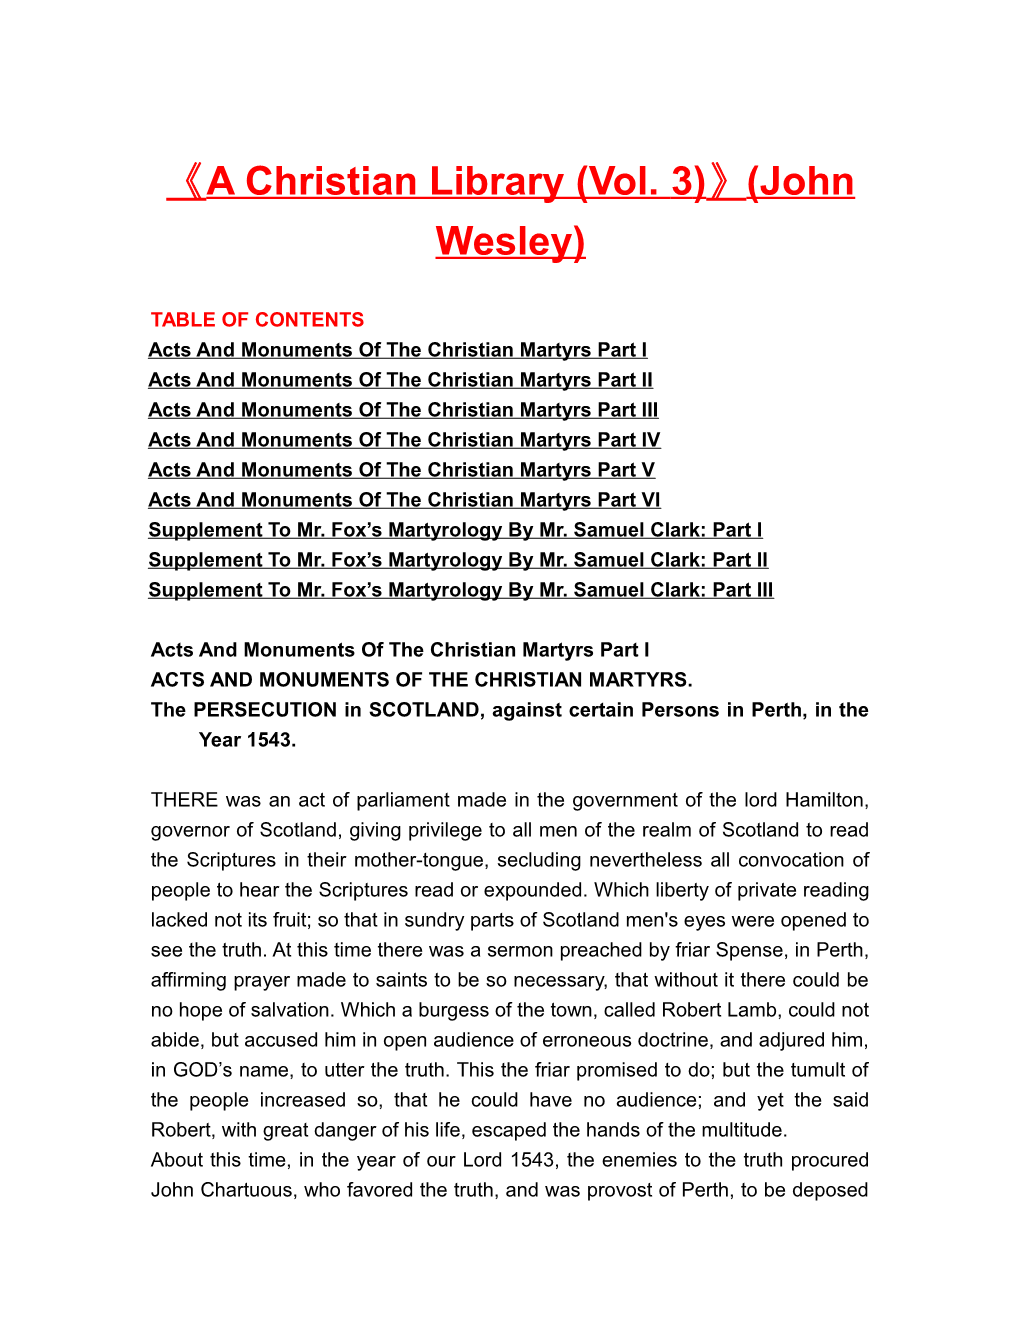 A Christian Library (Vol. 3) (John Wesley)